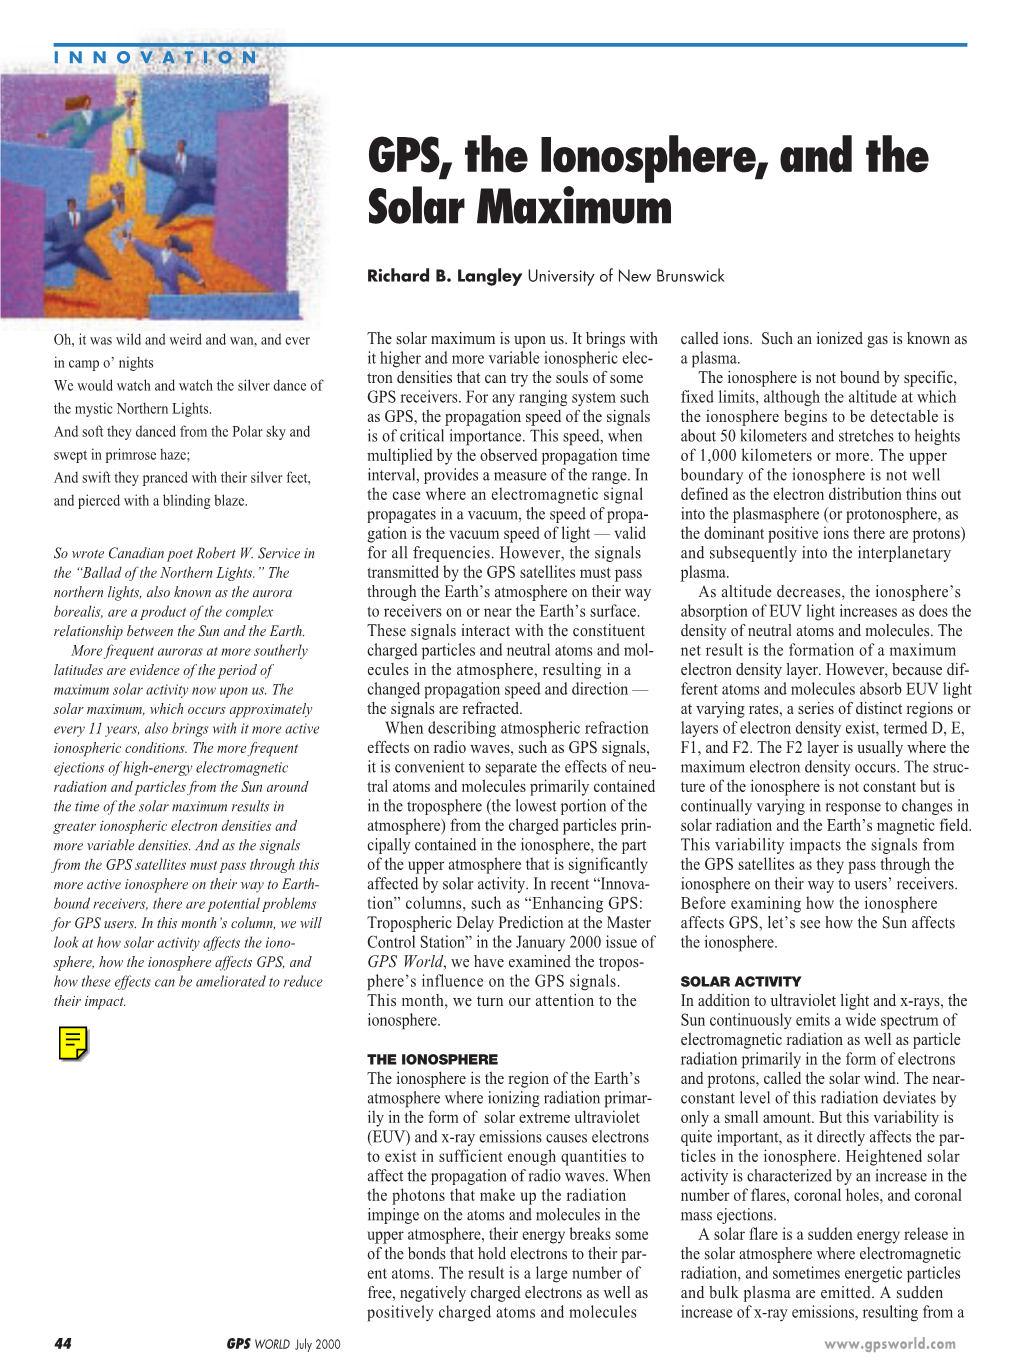 GPS, the Ionosphere, and the Solar Maximimum